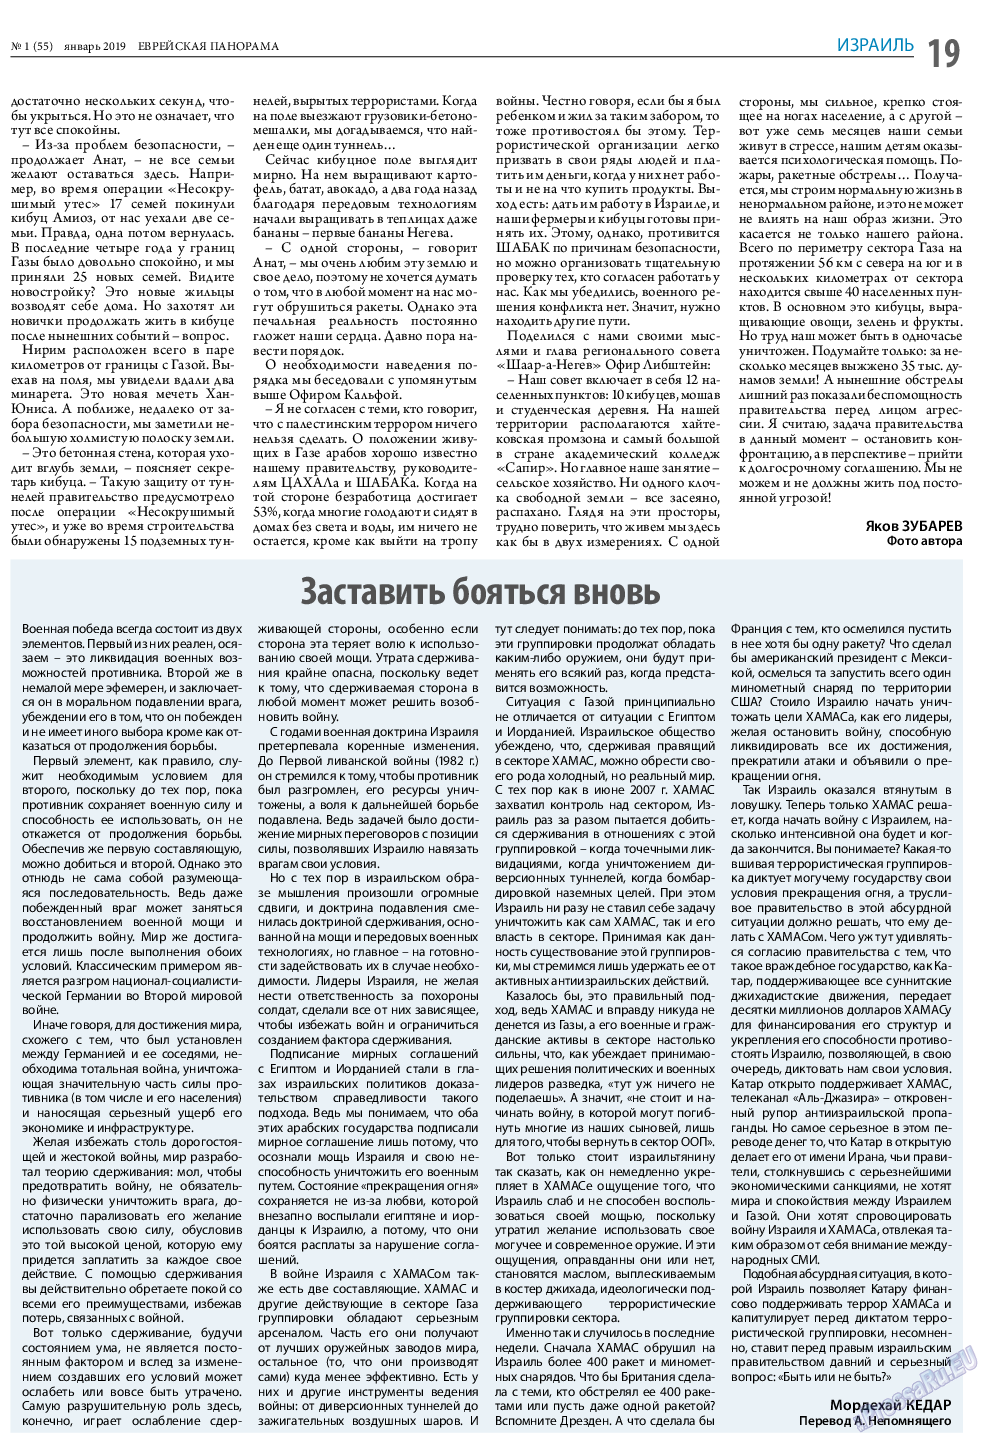 Еврейская панорама, газета. 2019 №1 стр.19